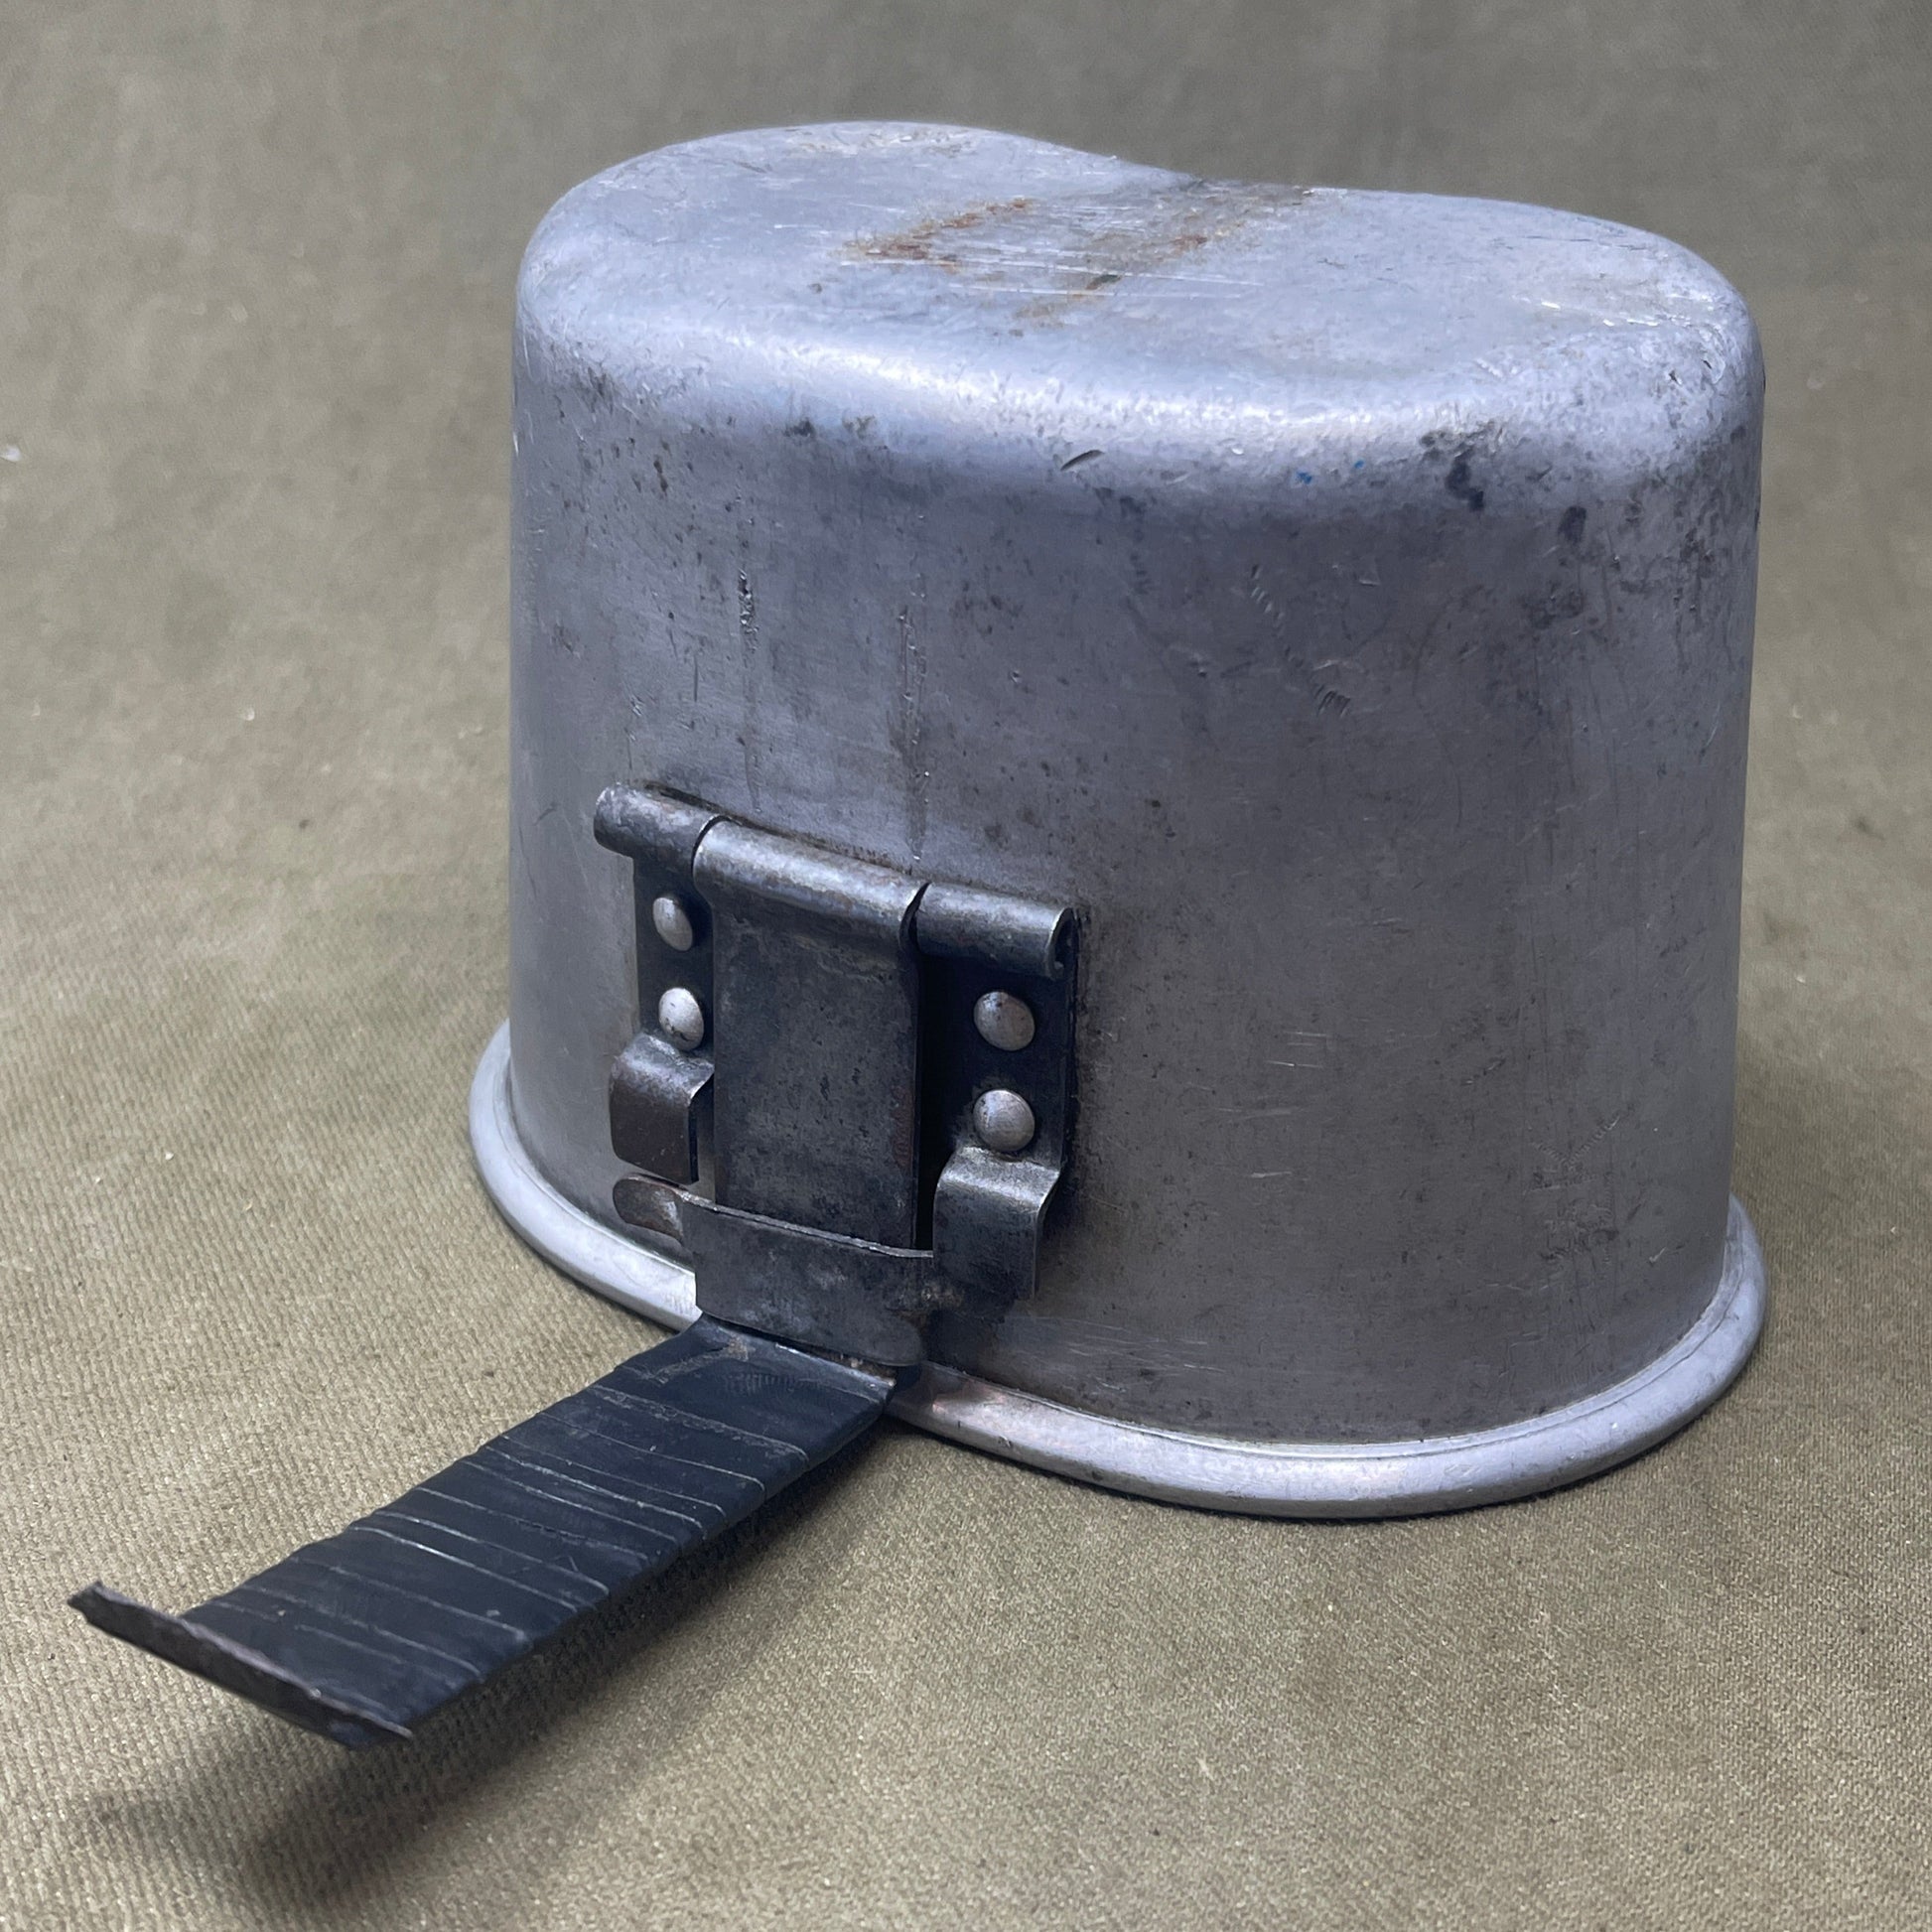 US Army WW2 Mess Kit, Aluminium Cup